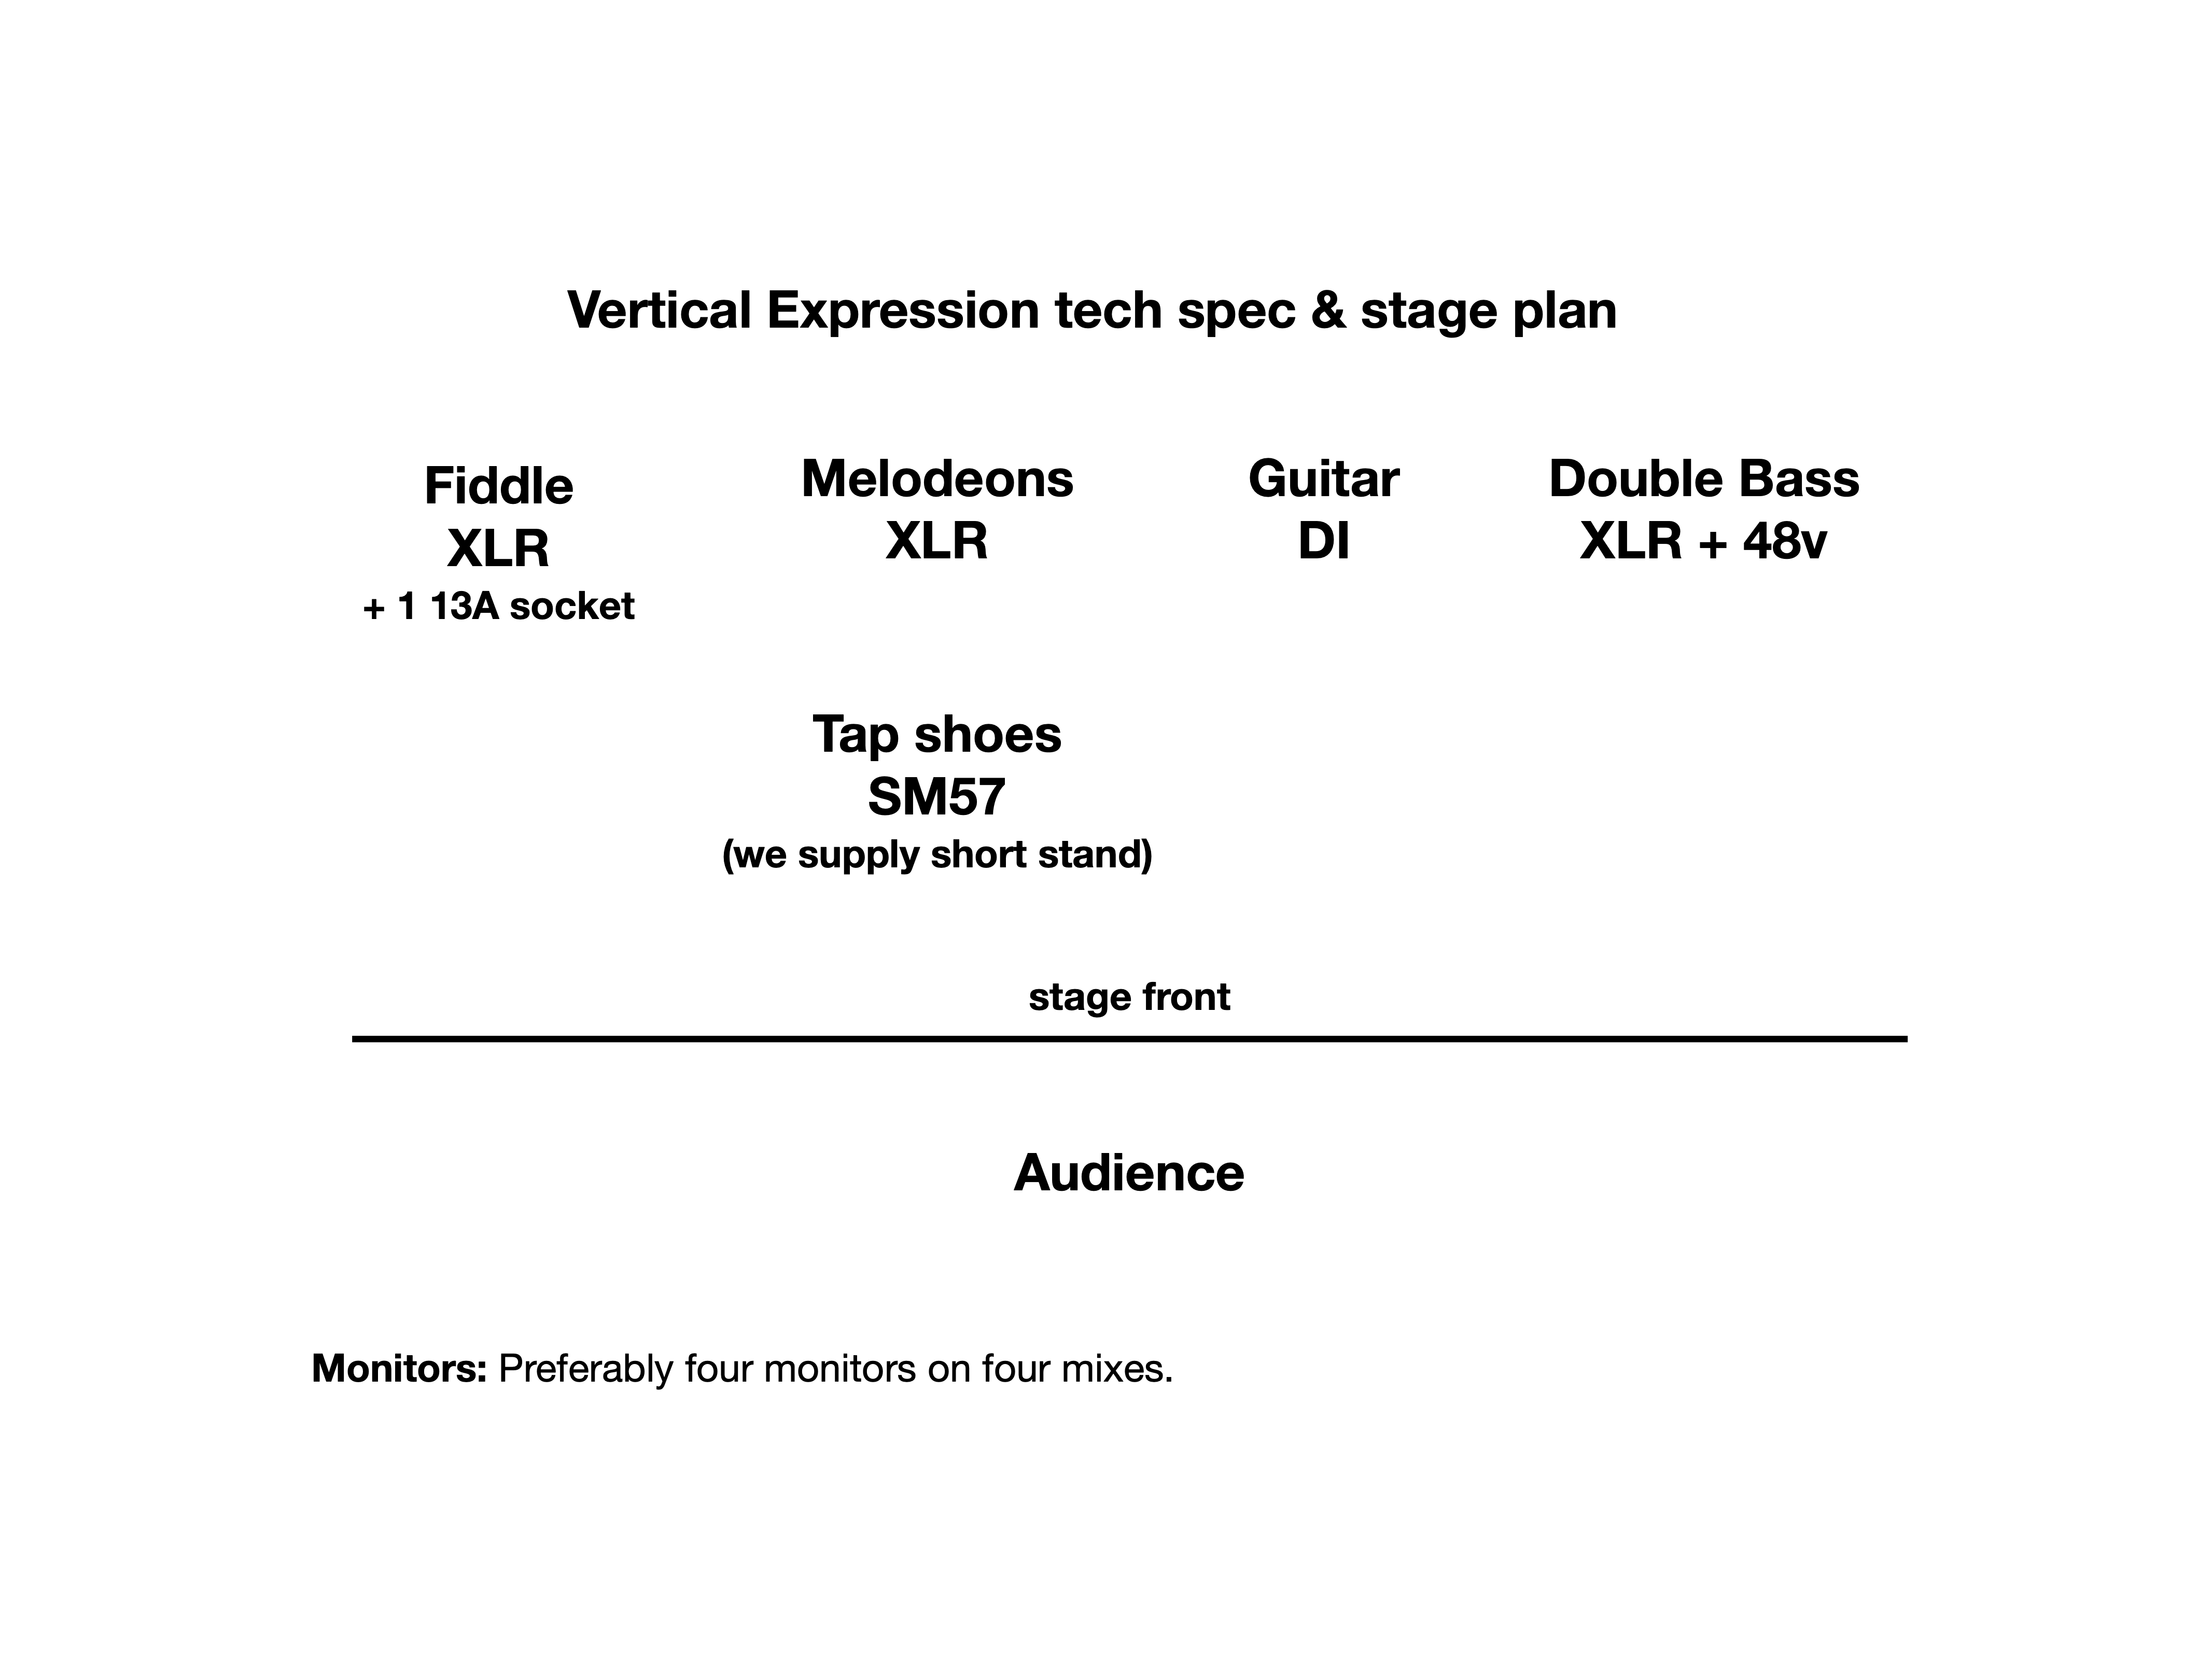 Vertical Expression's tech info